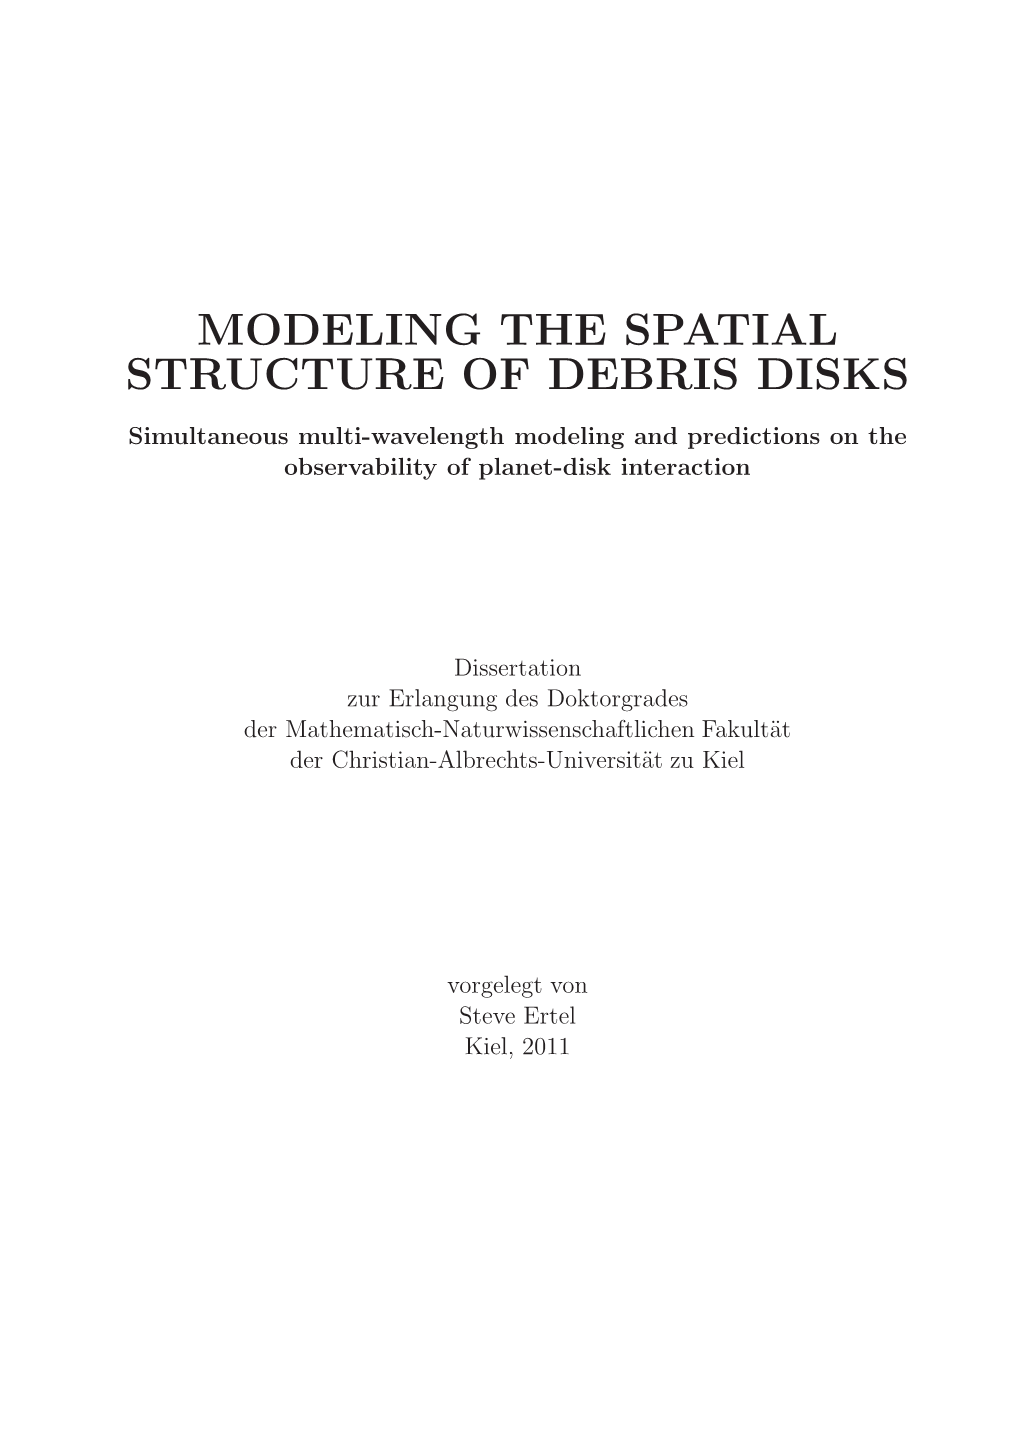 Modeling the Spatial Structure of Debris Disks